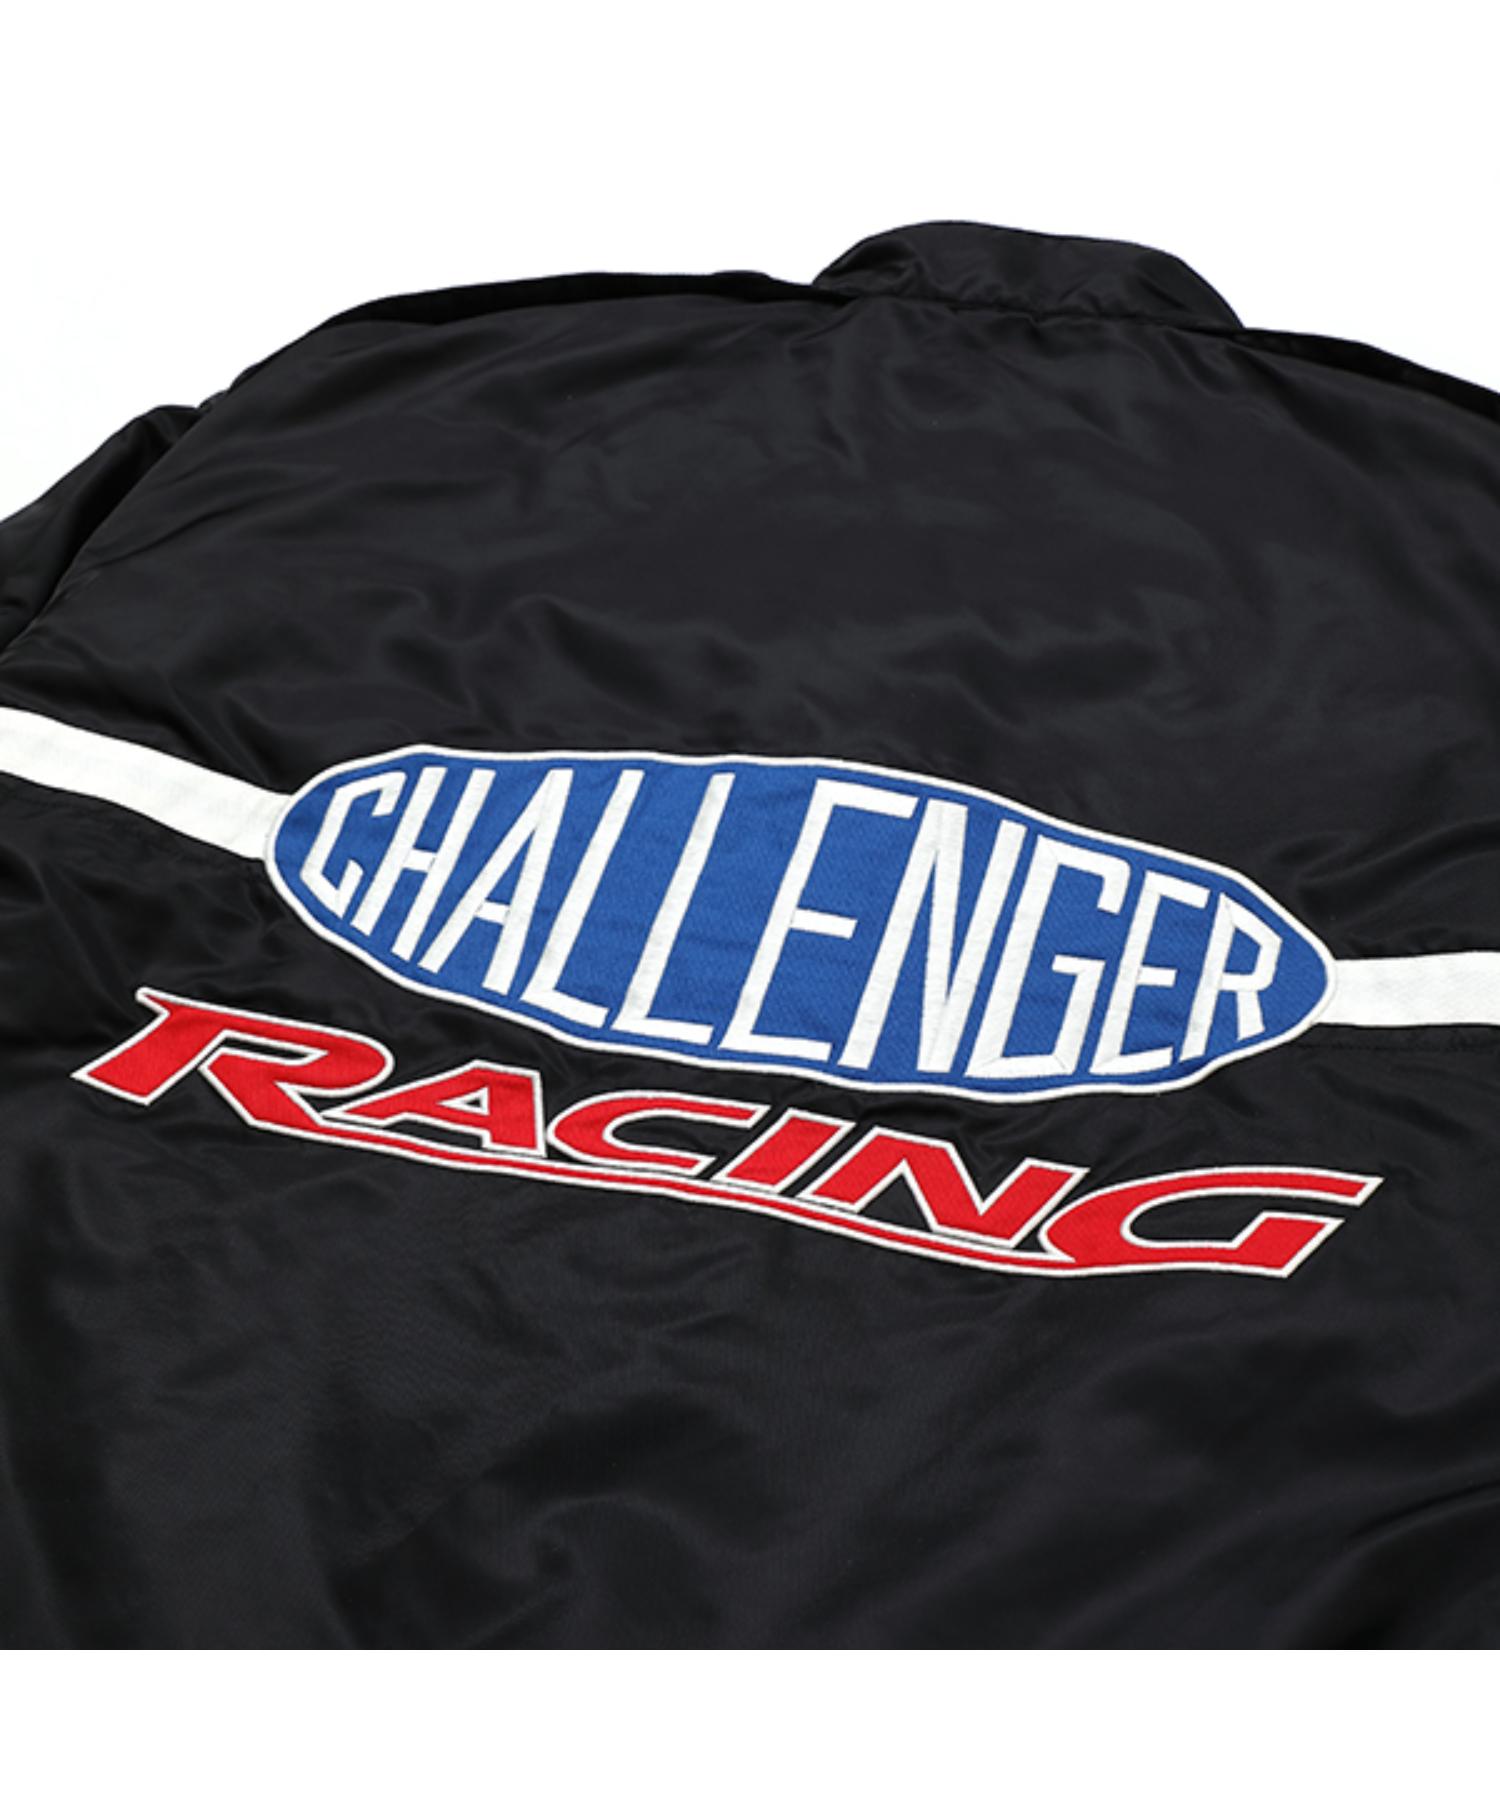 CMC RACING JACKET - CHALLENGER (チャレンジャー) - outer (アウター